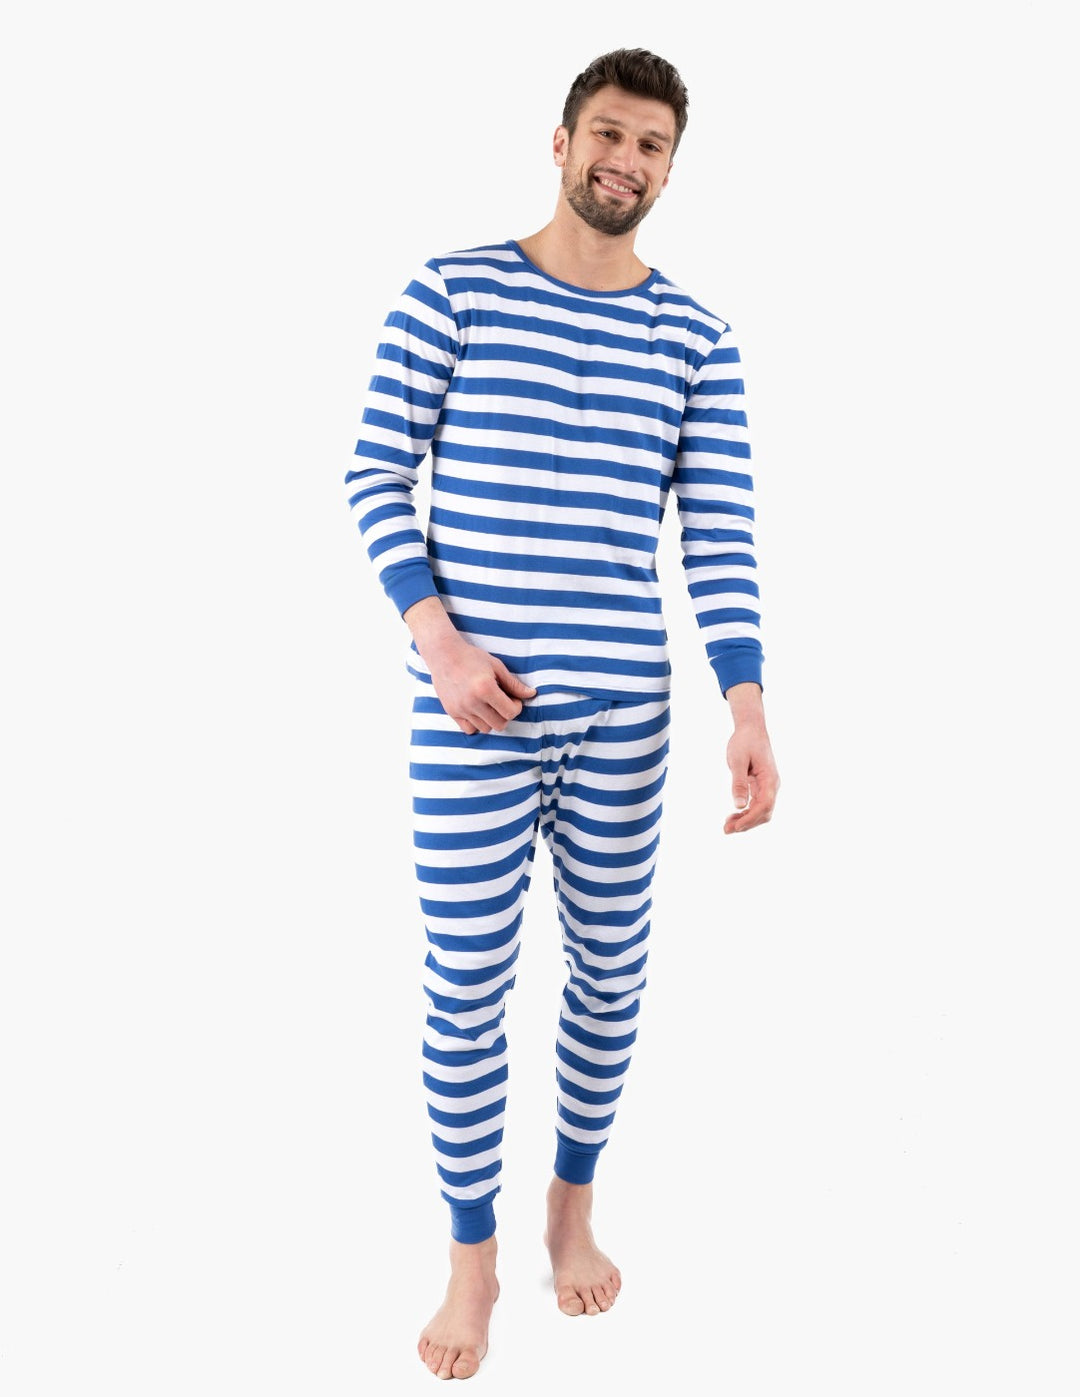 blue and white striped men's cotton pajama